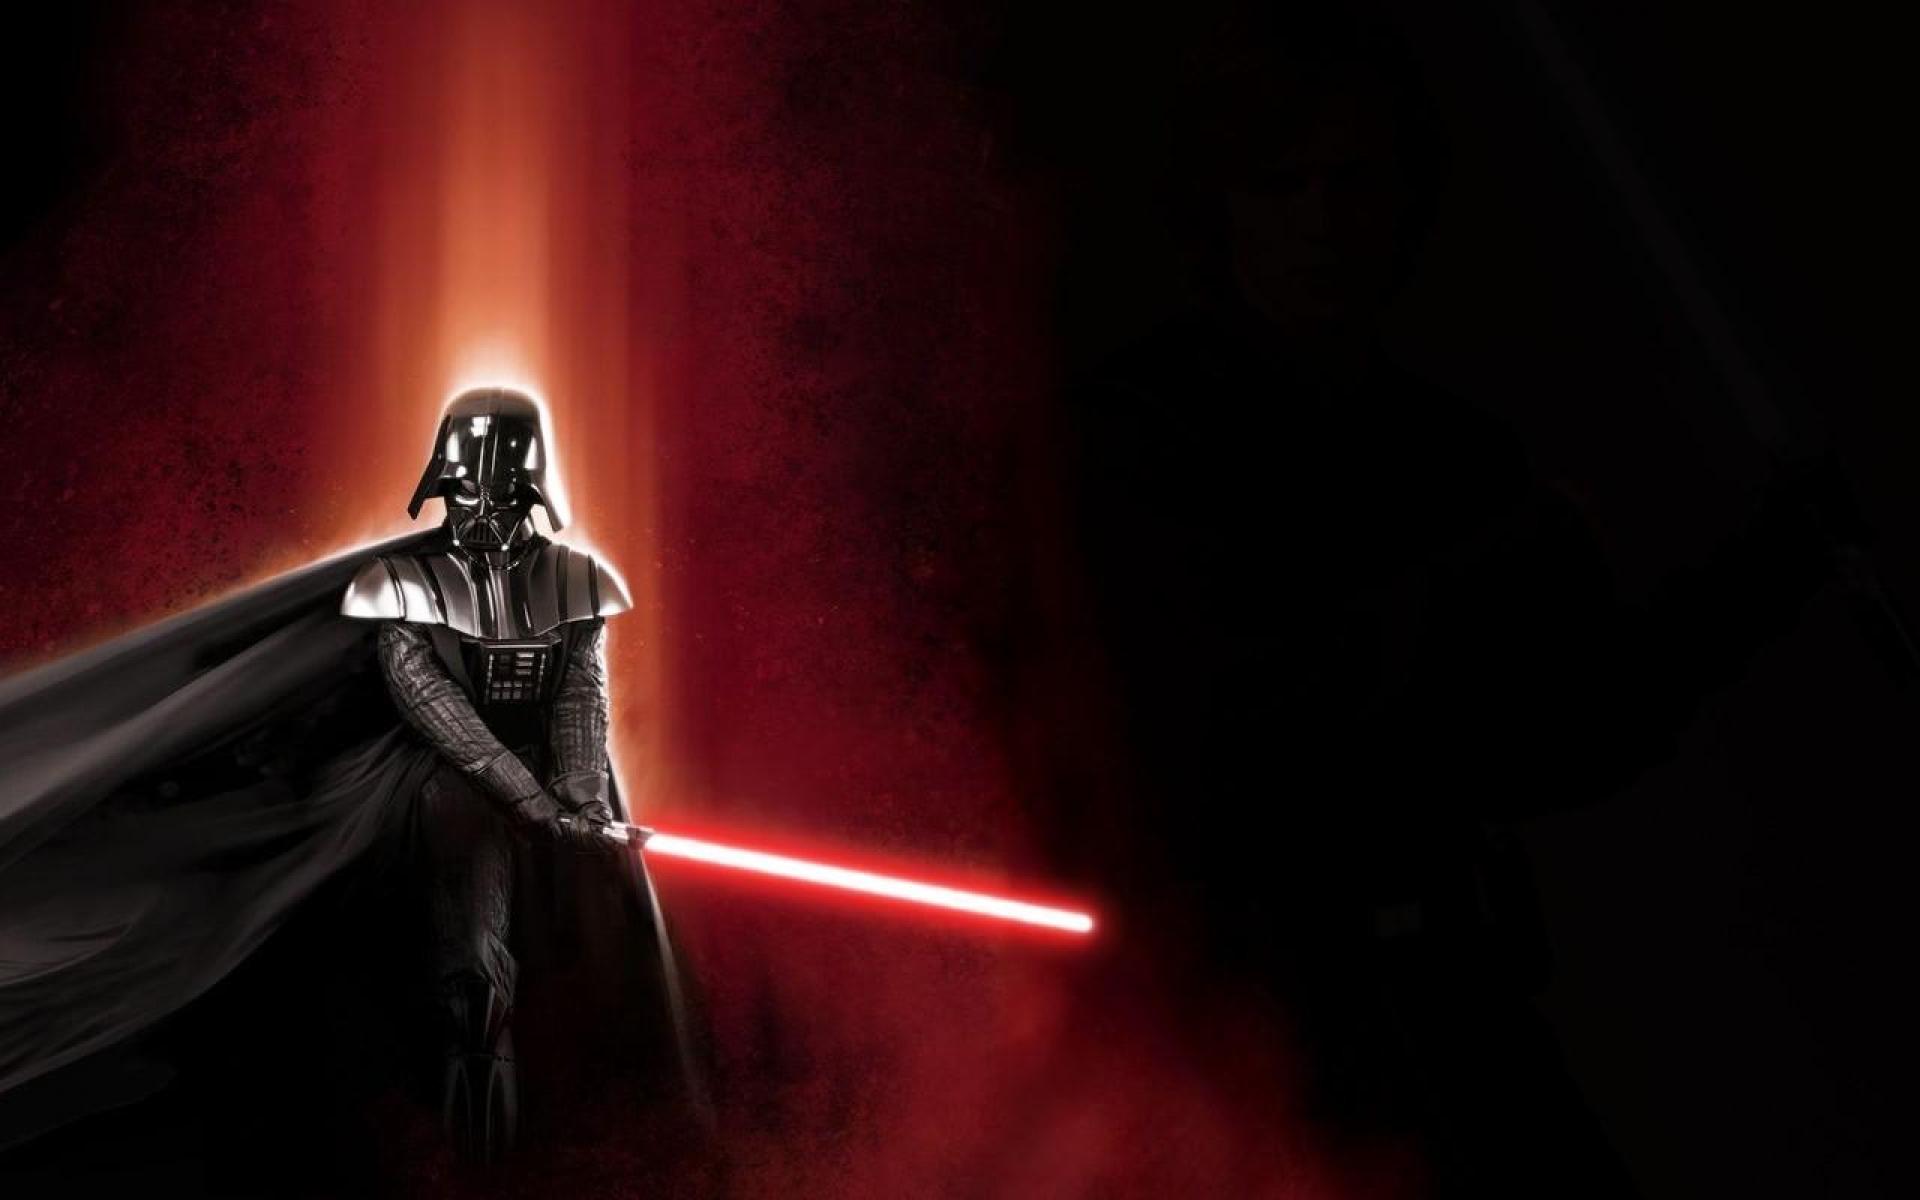 Darth Vader Star Wars Episode Iii Revenge Of The Sith